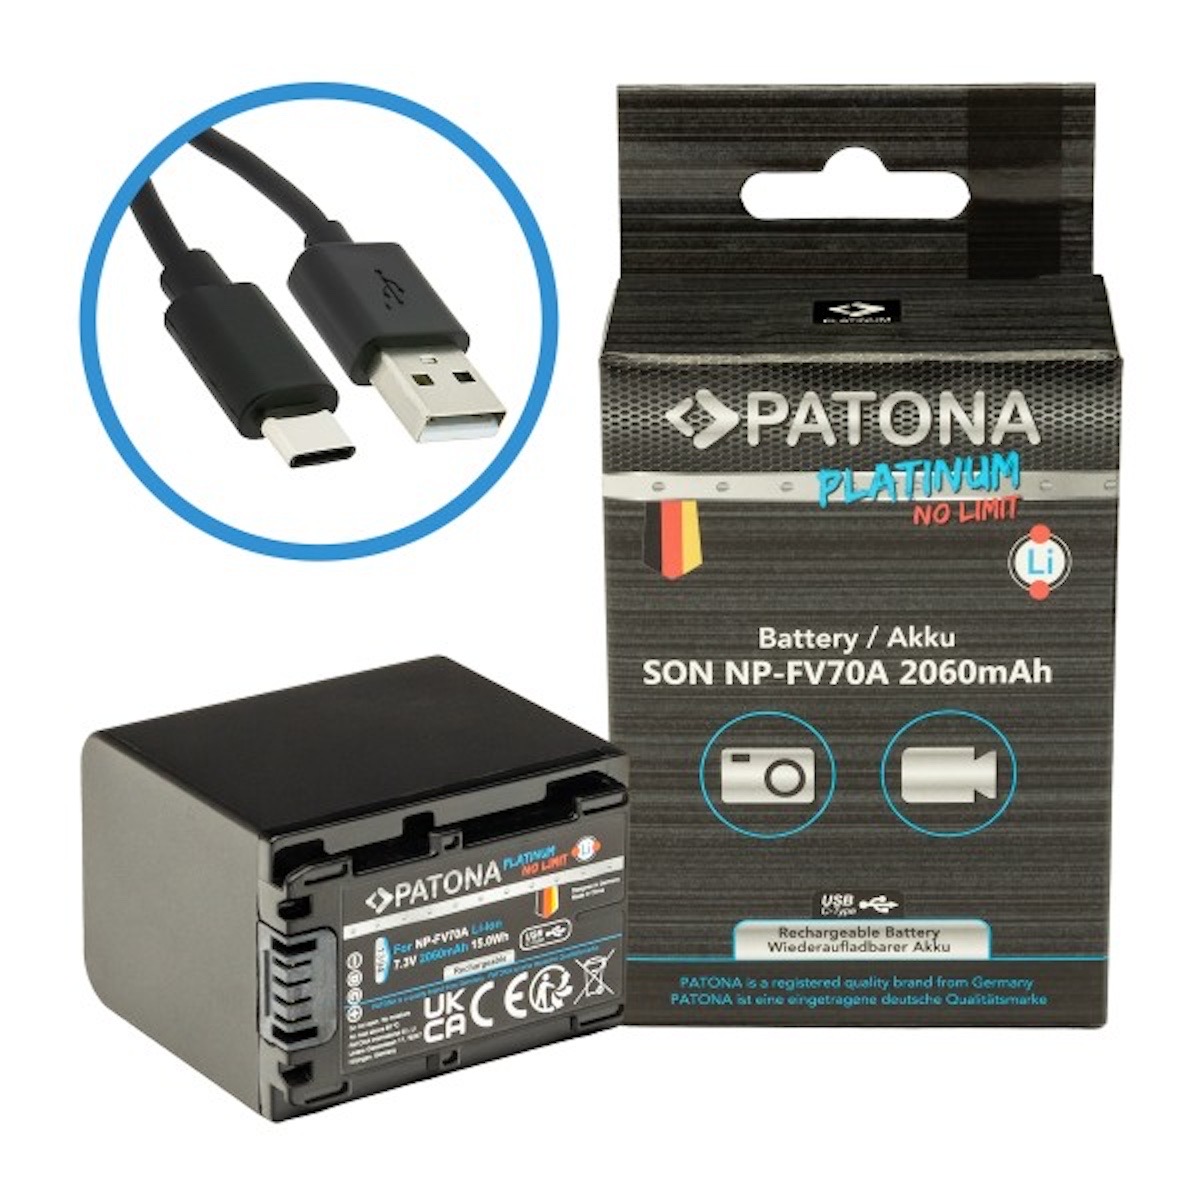 Patona Platinum Akku USB-C f. Sony NP-FV70A